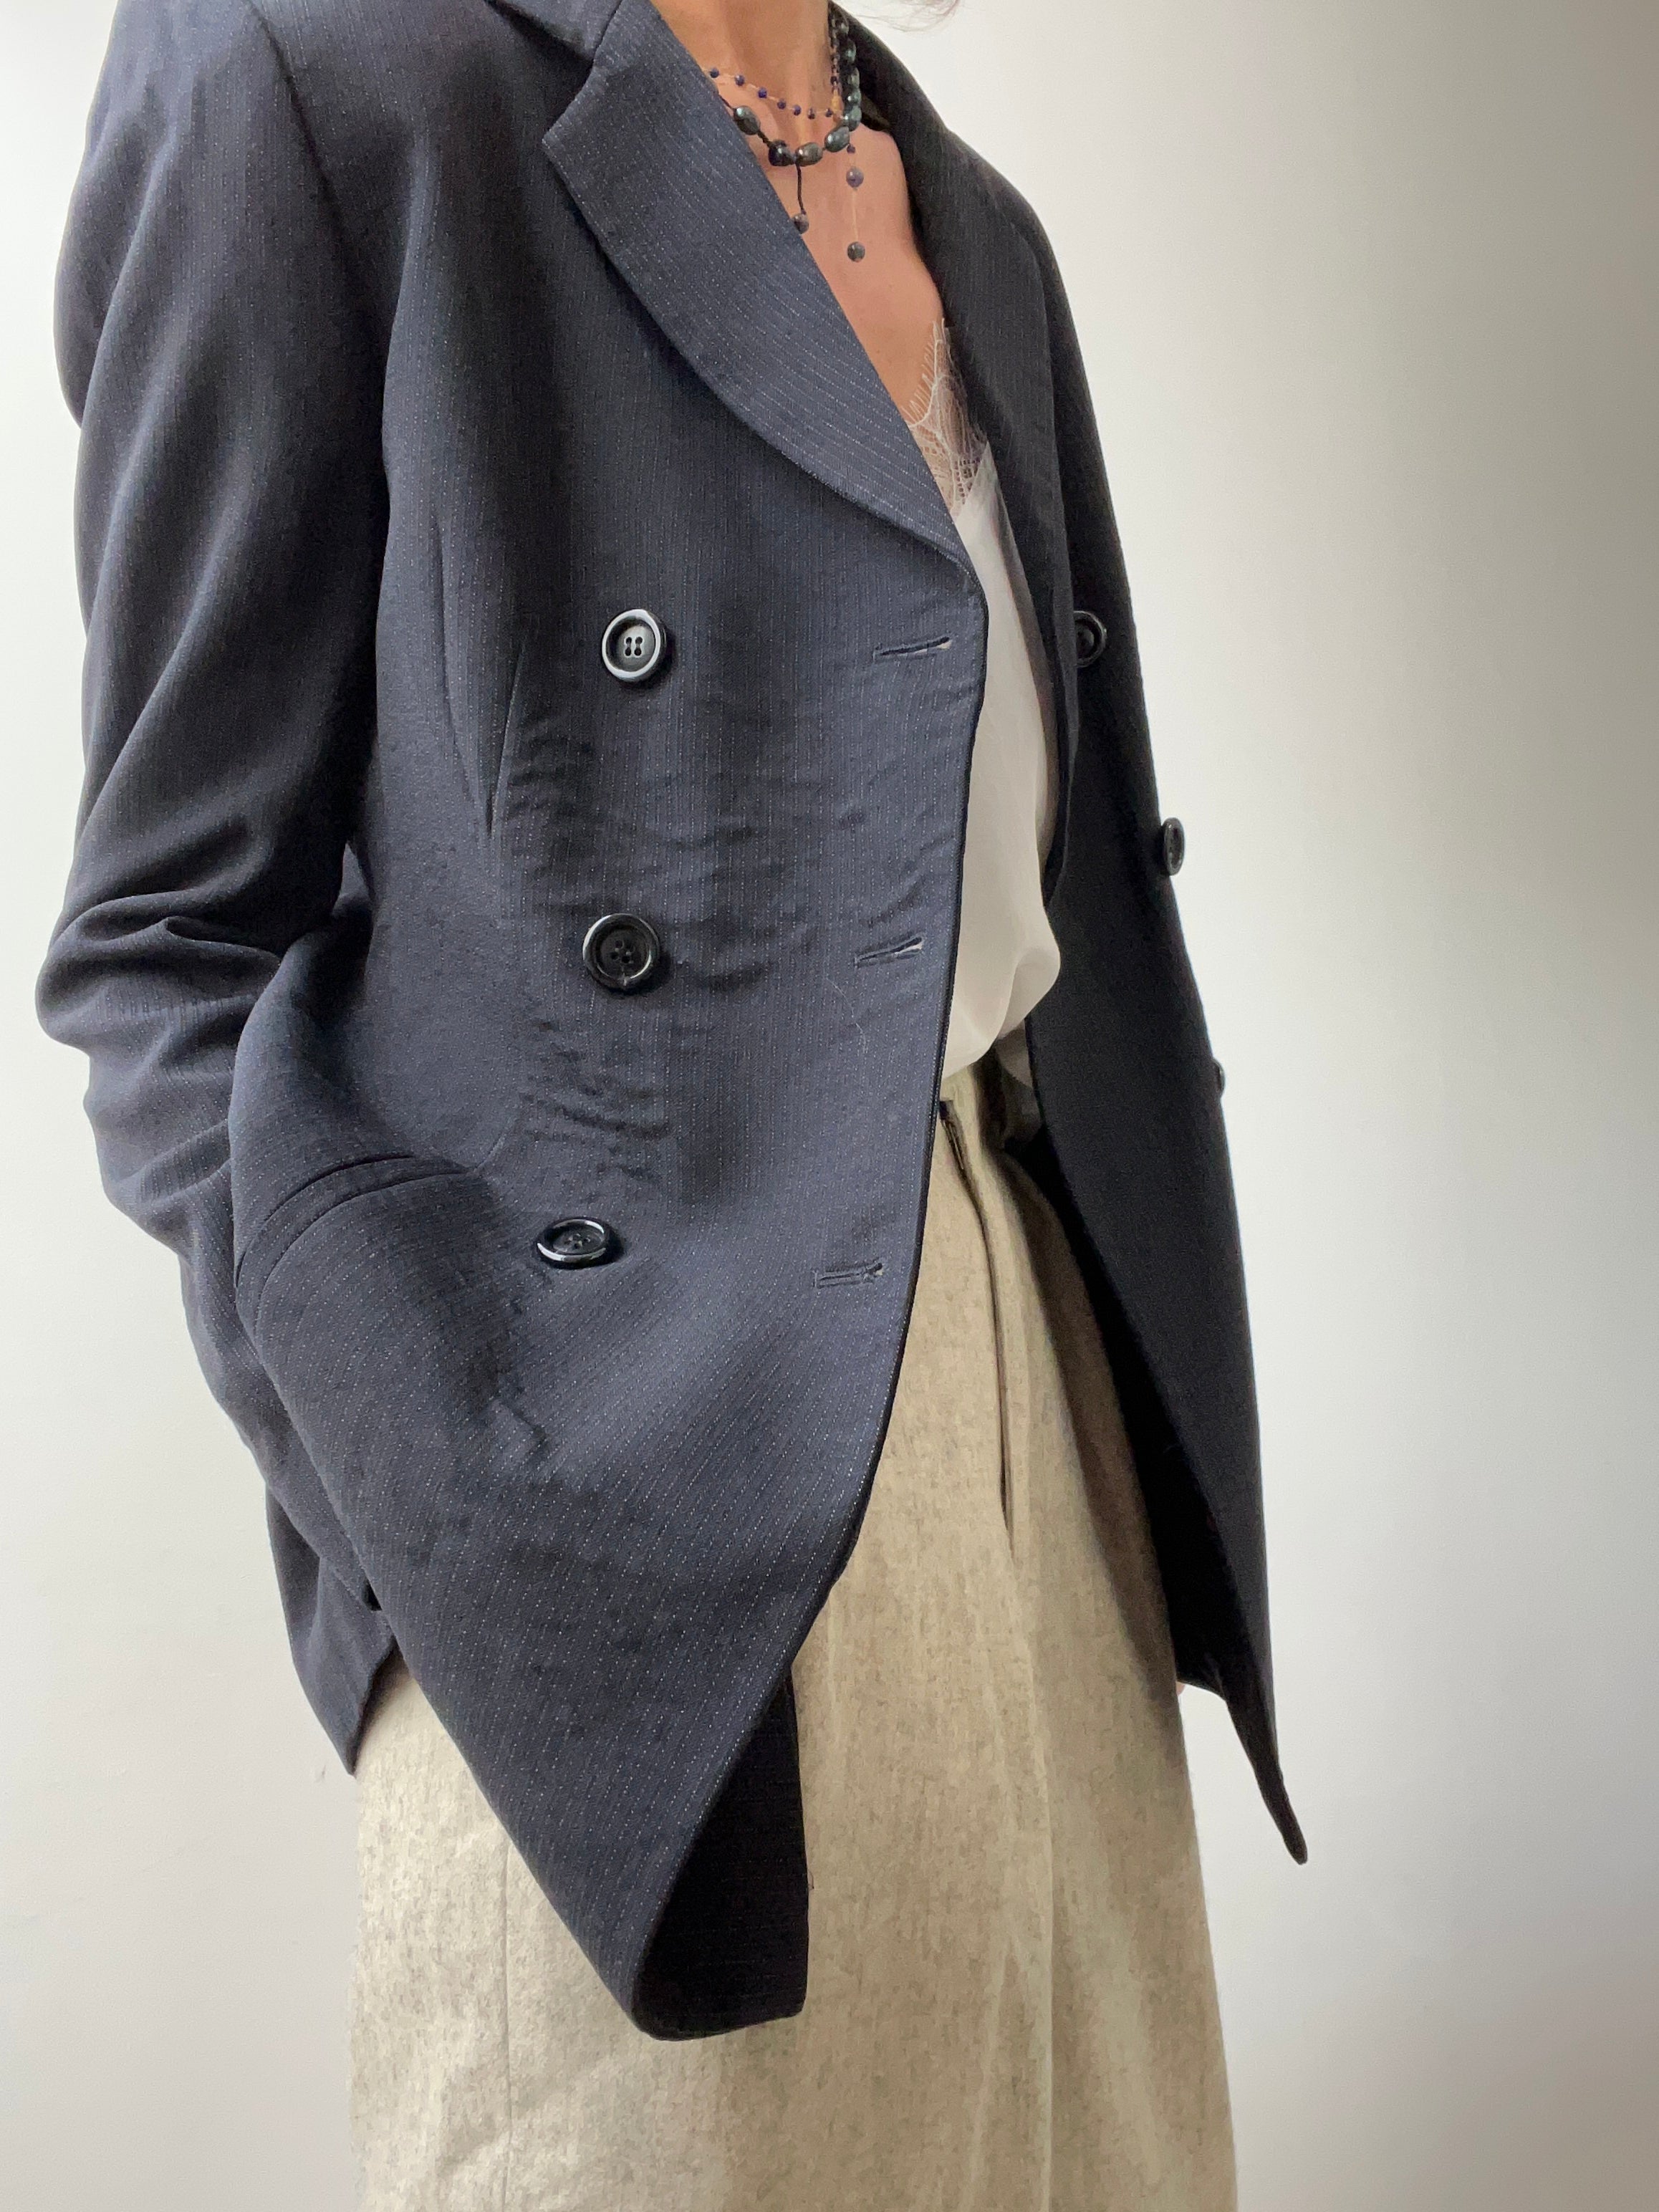 Emporio Armani Jackets Small Vintage Pinstripe Women’s Blazer